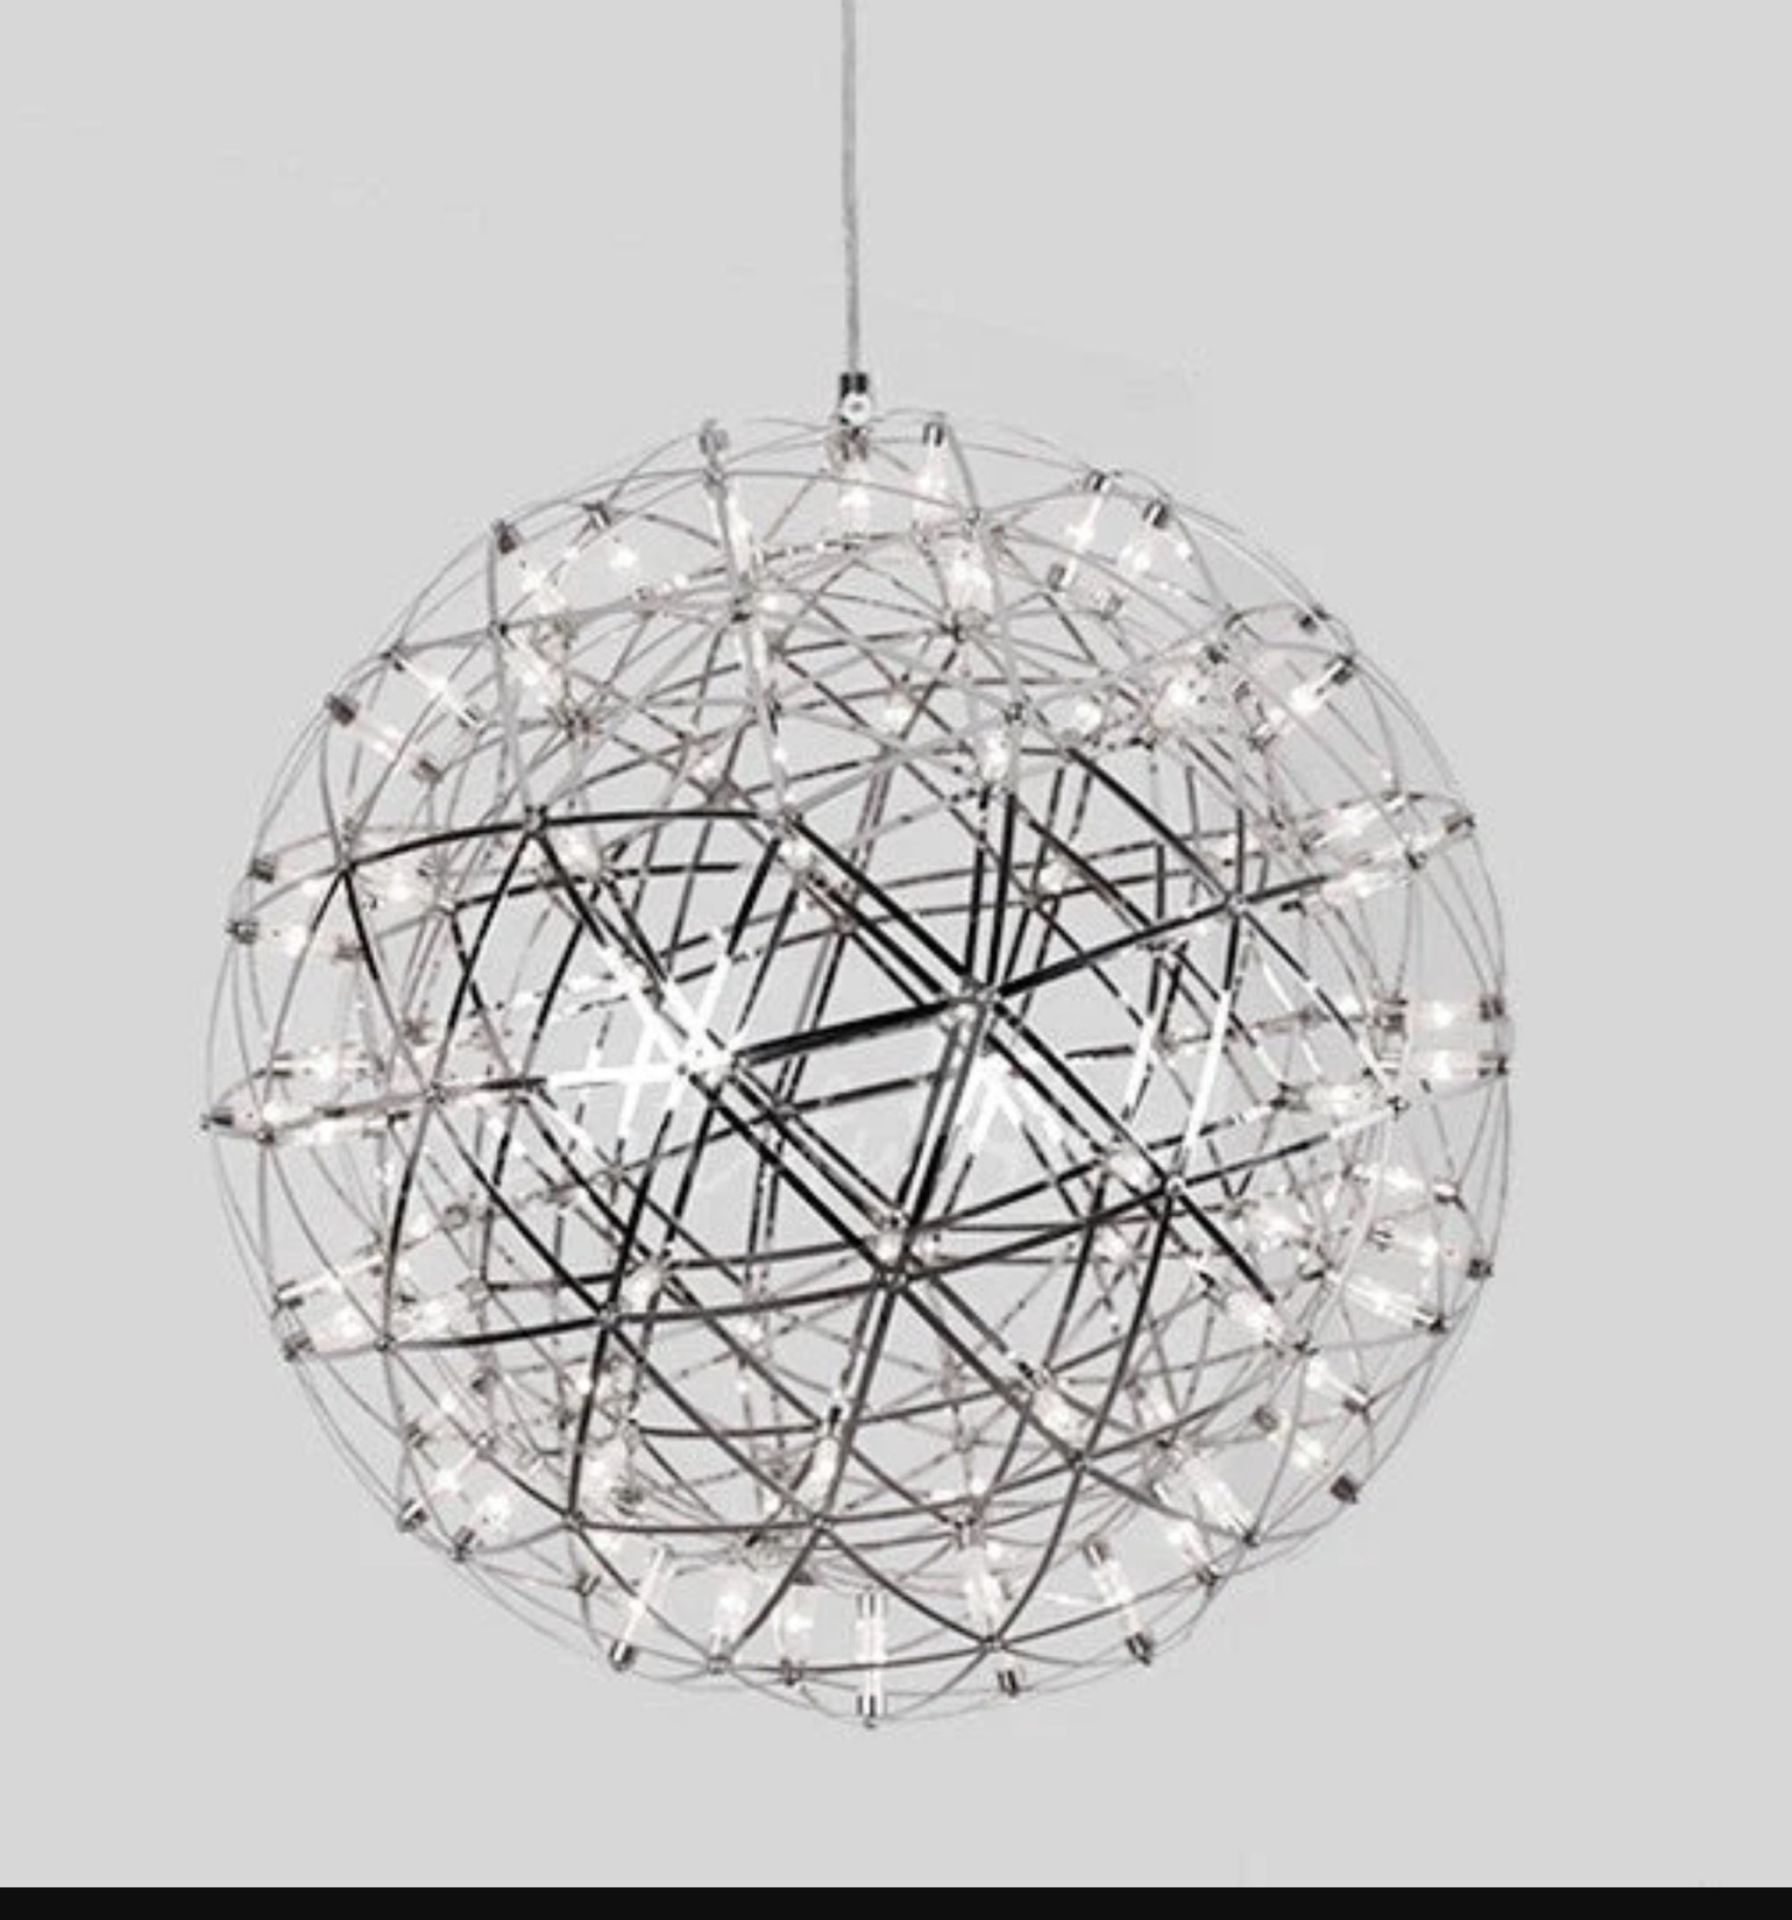 I-Lite chrome spherical globe striking silver starburst light pendant is inspired by elements of the